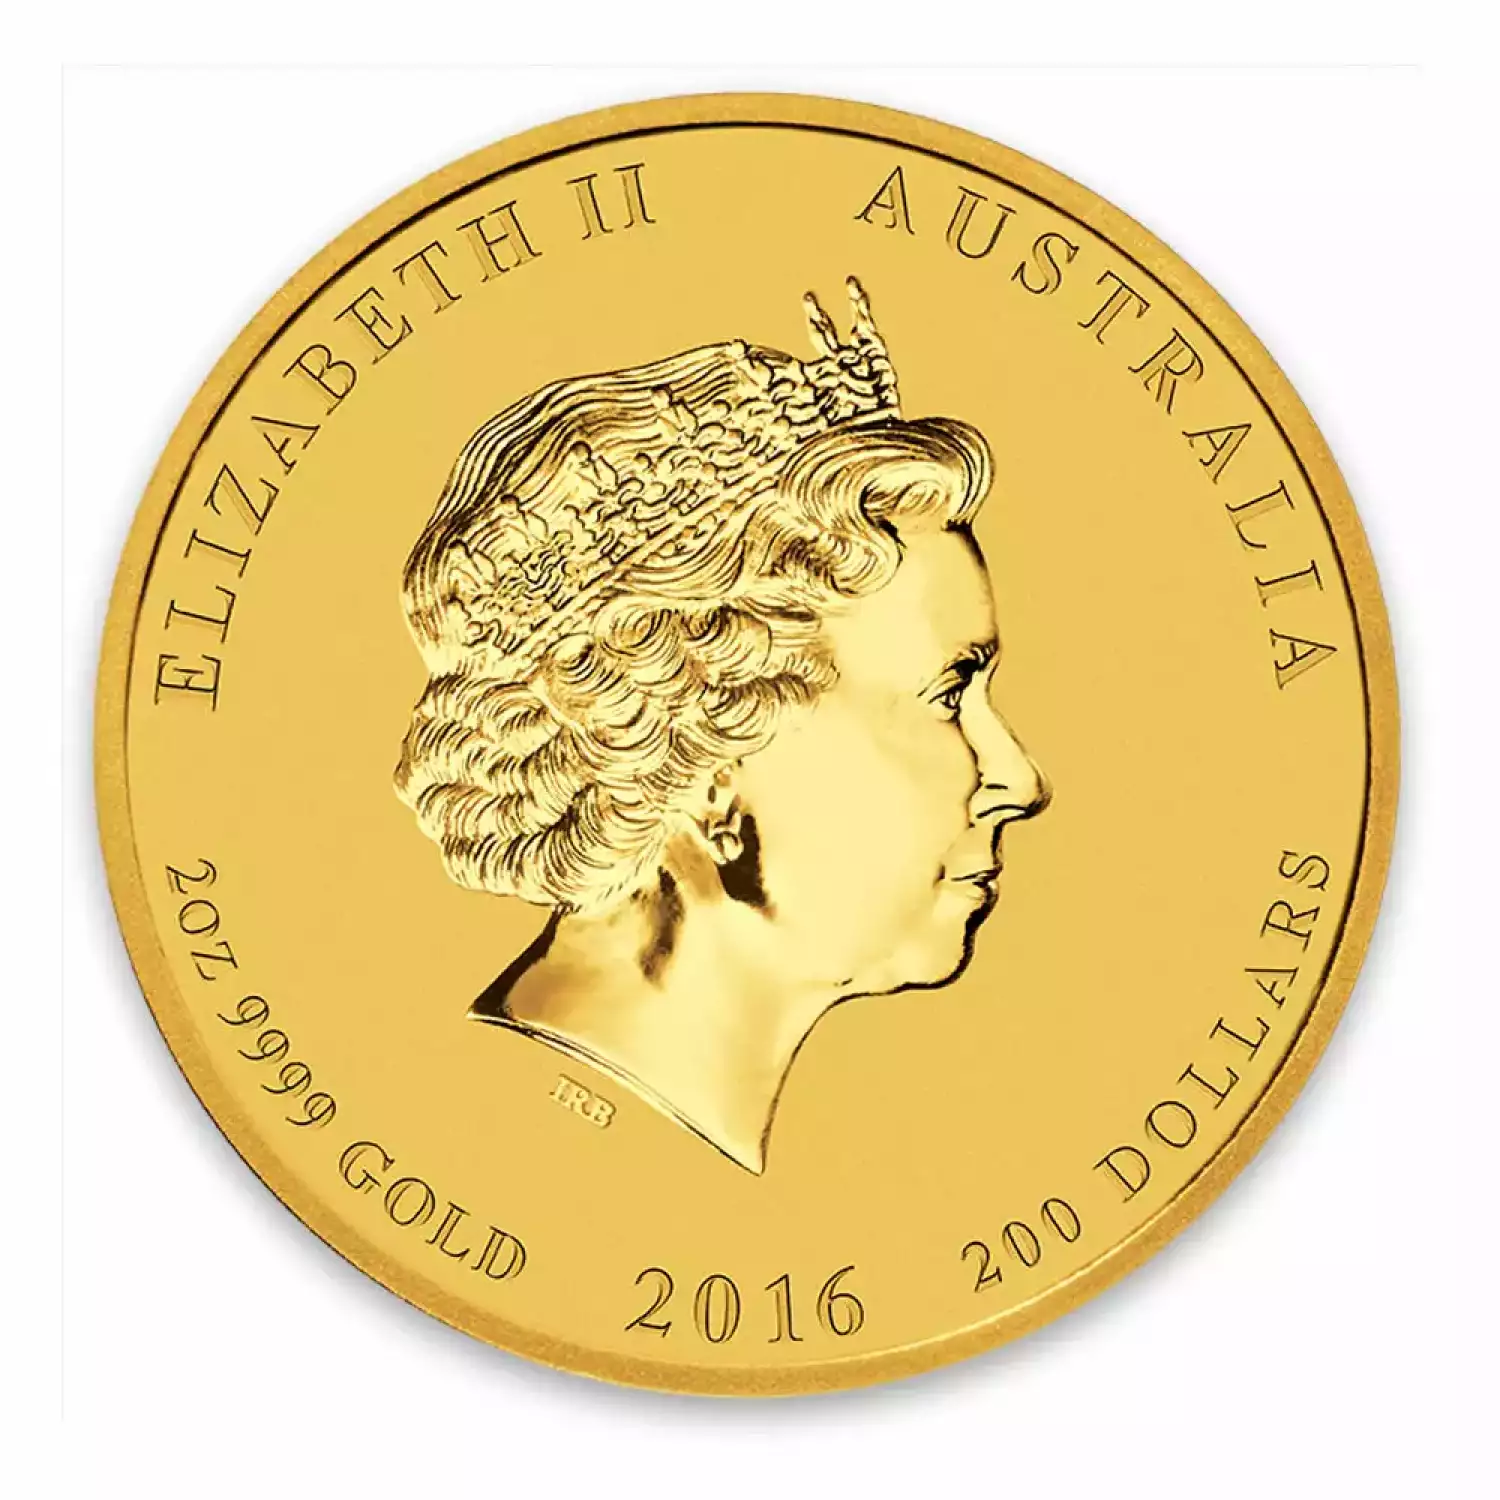 2016 2 oz Australian Perth Mint Gold Lunar II: Year of the Monkey (2)